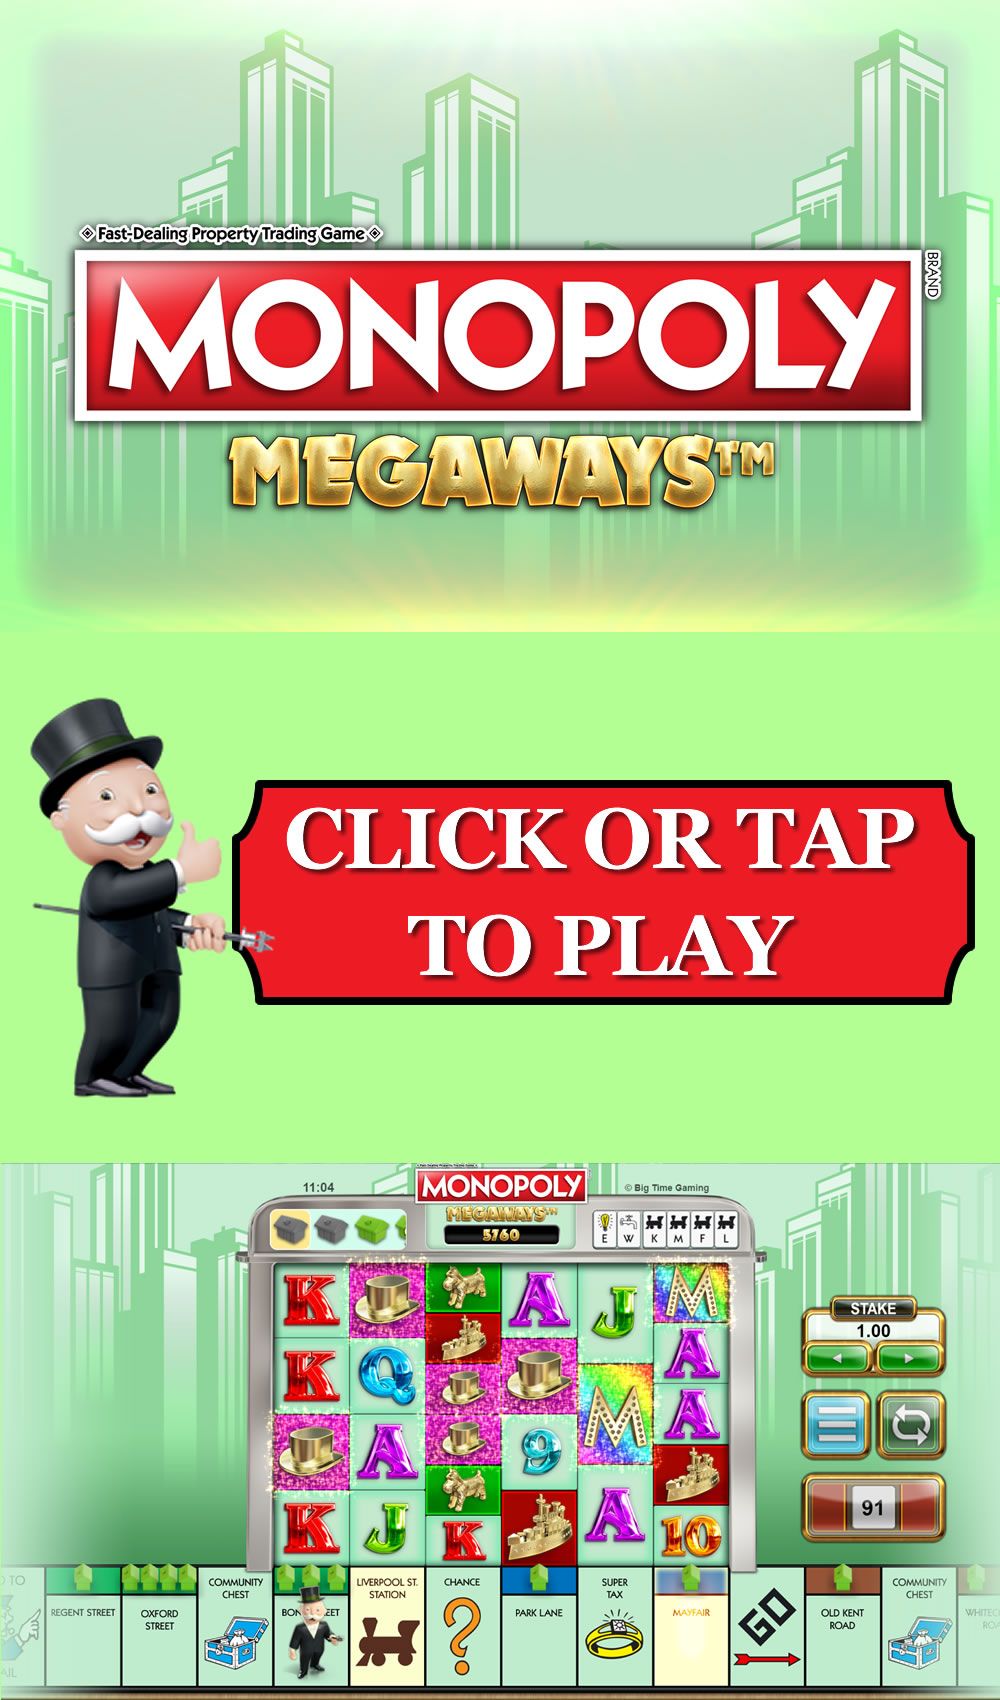 Megaways Casino Online